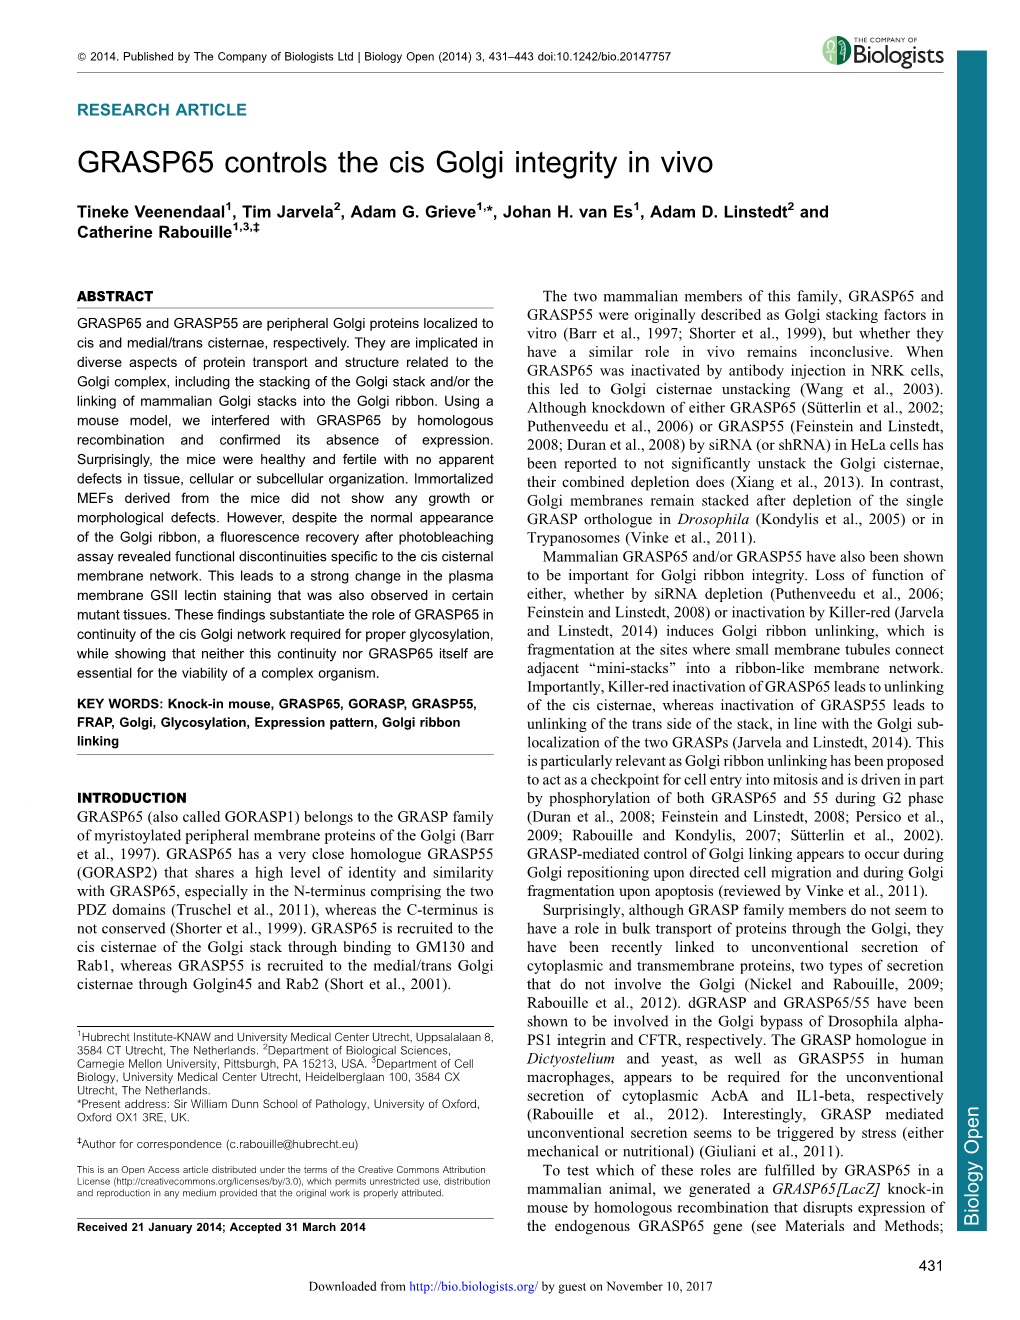 GRASP65 Controls the Cis Golgi Integrity in Vivo